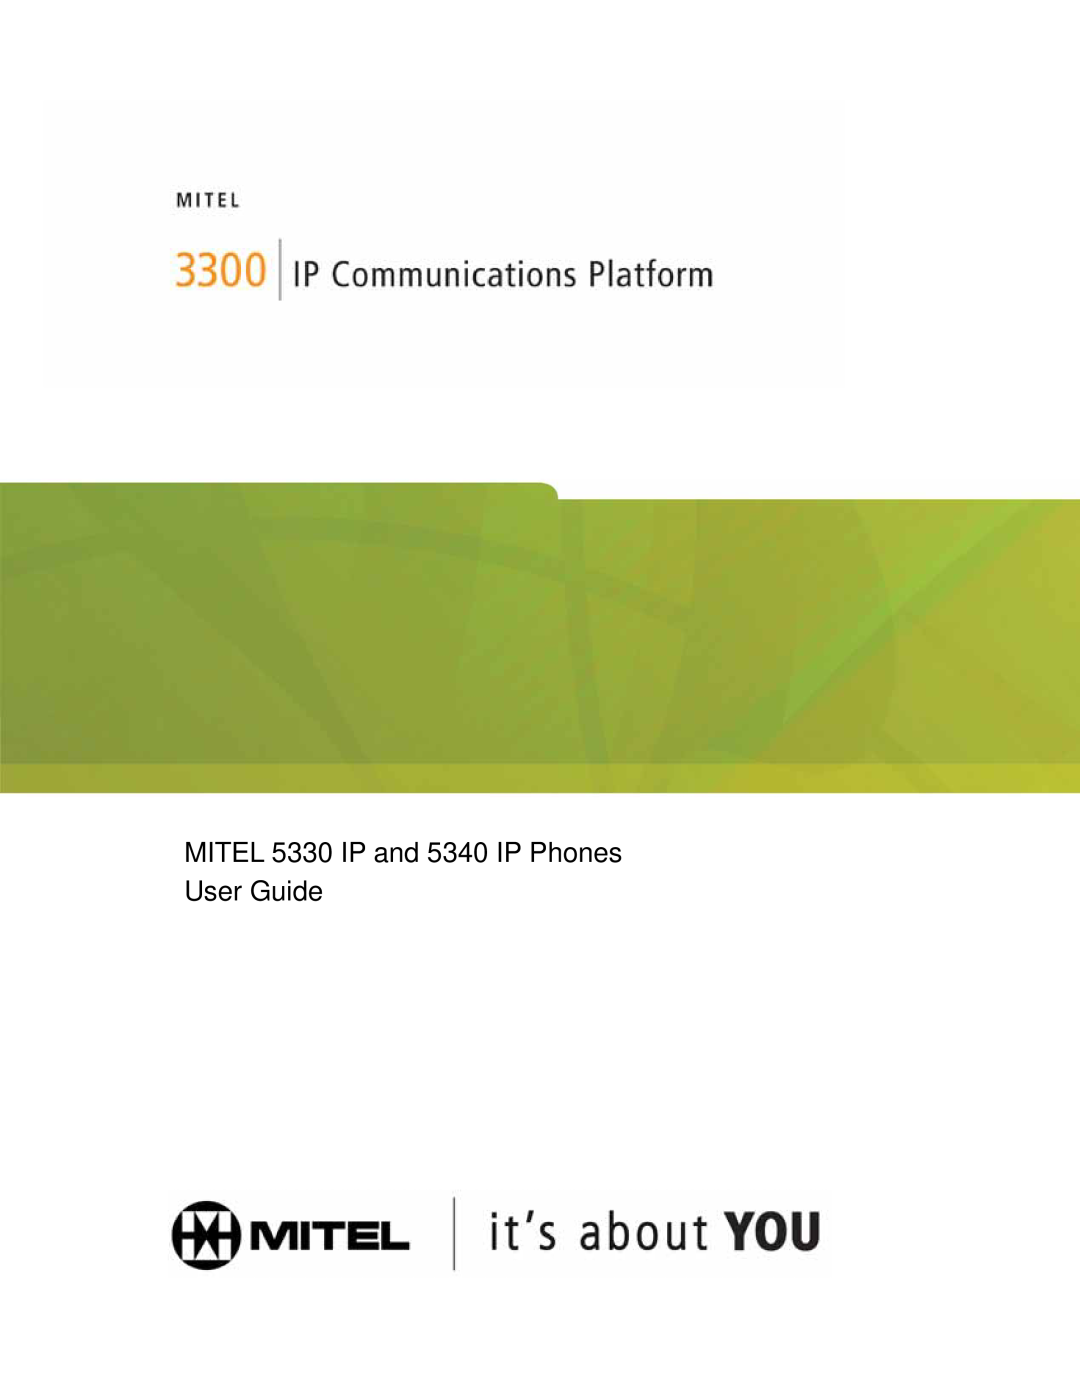 Mitel 5330 manual SX-200 IP Communications Platform, IP and 5340 IP Phones User Guide, Mitel 